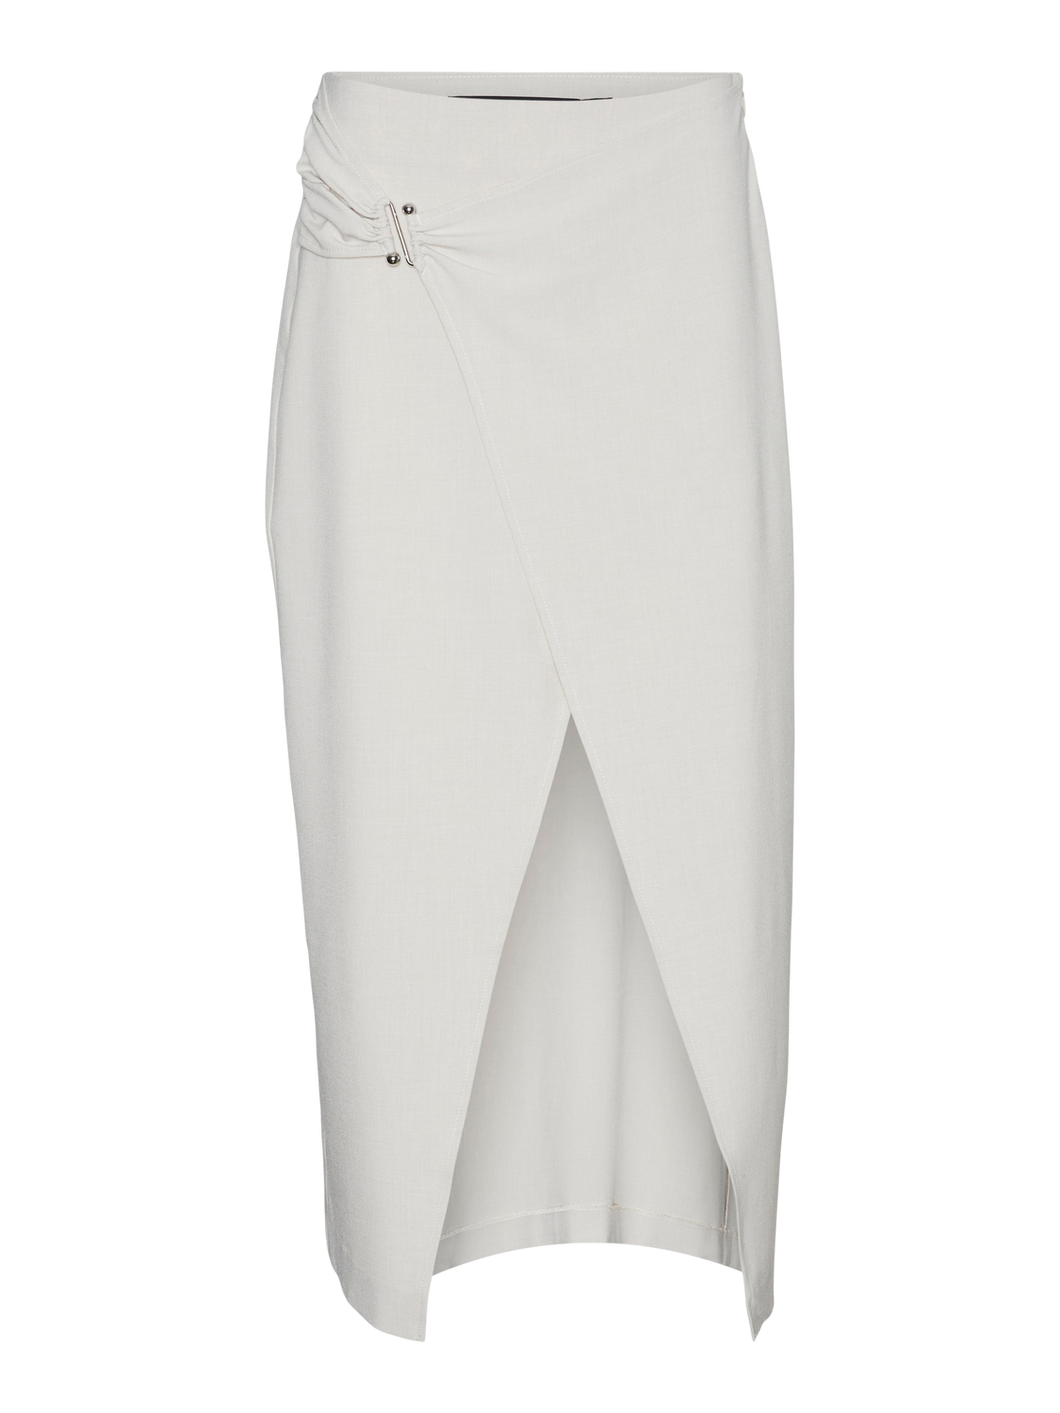 VMCLOVER Skirt - Silver Lining